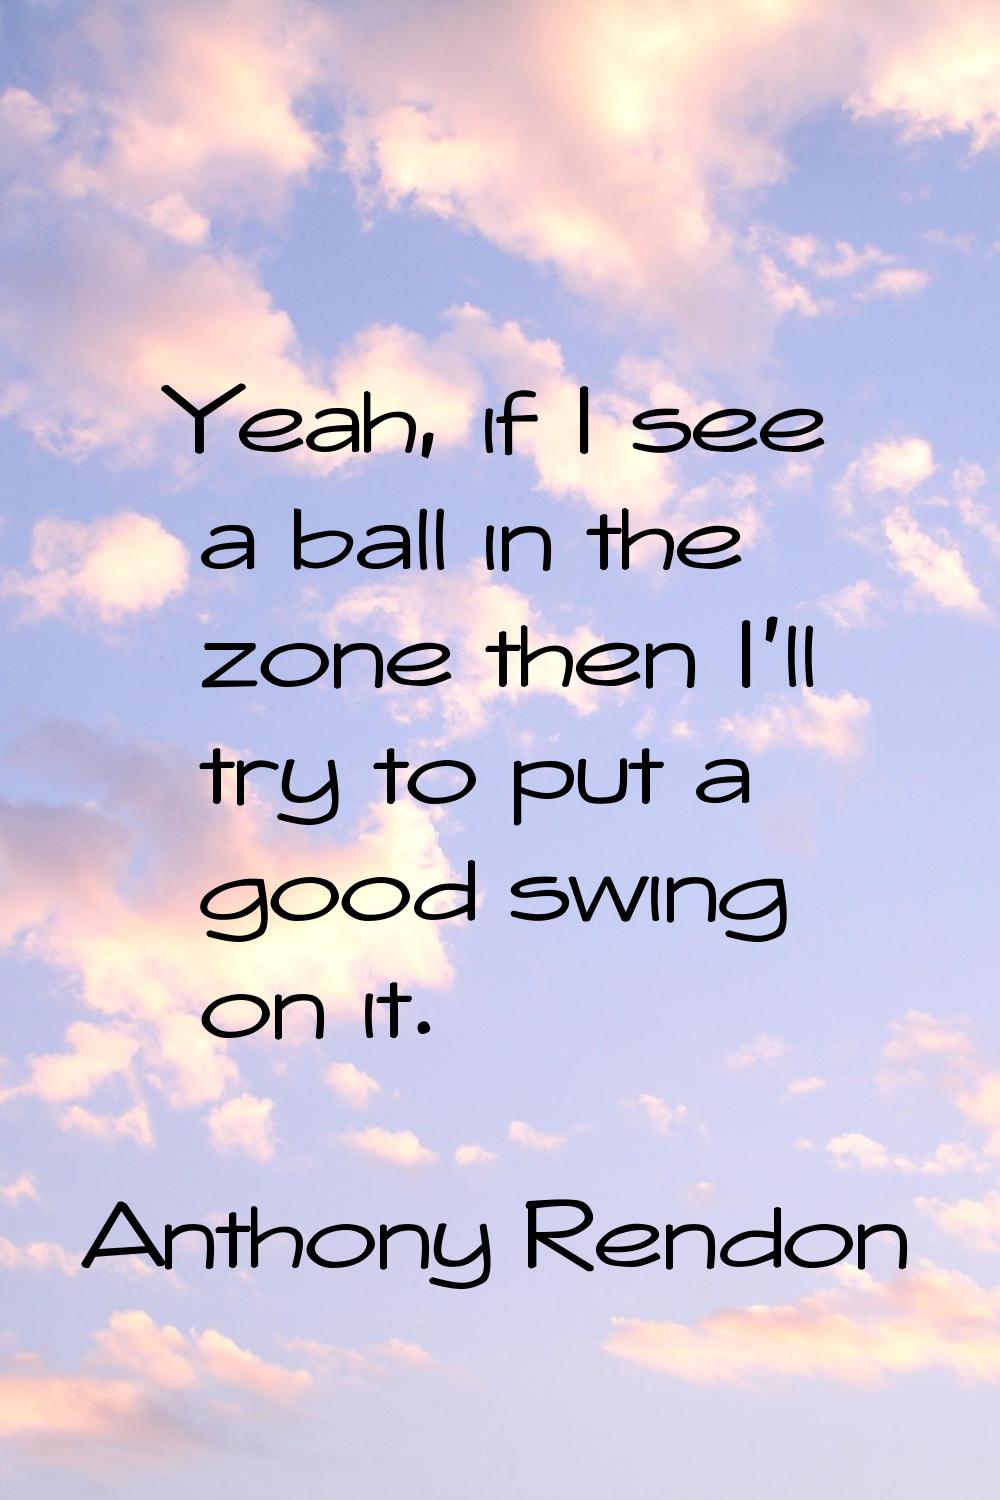 Yeah, if I see a ball in the zone then I'll try to put a good swing on it.